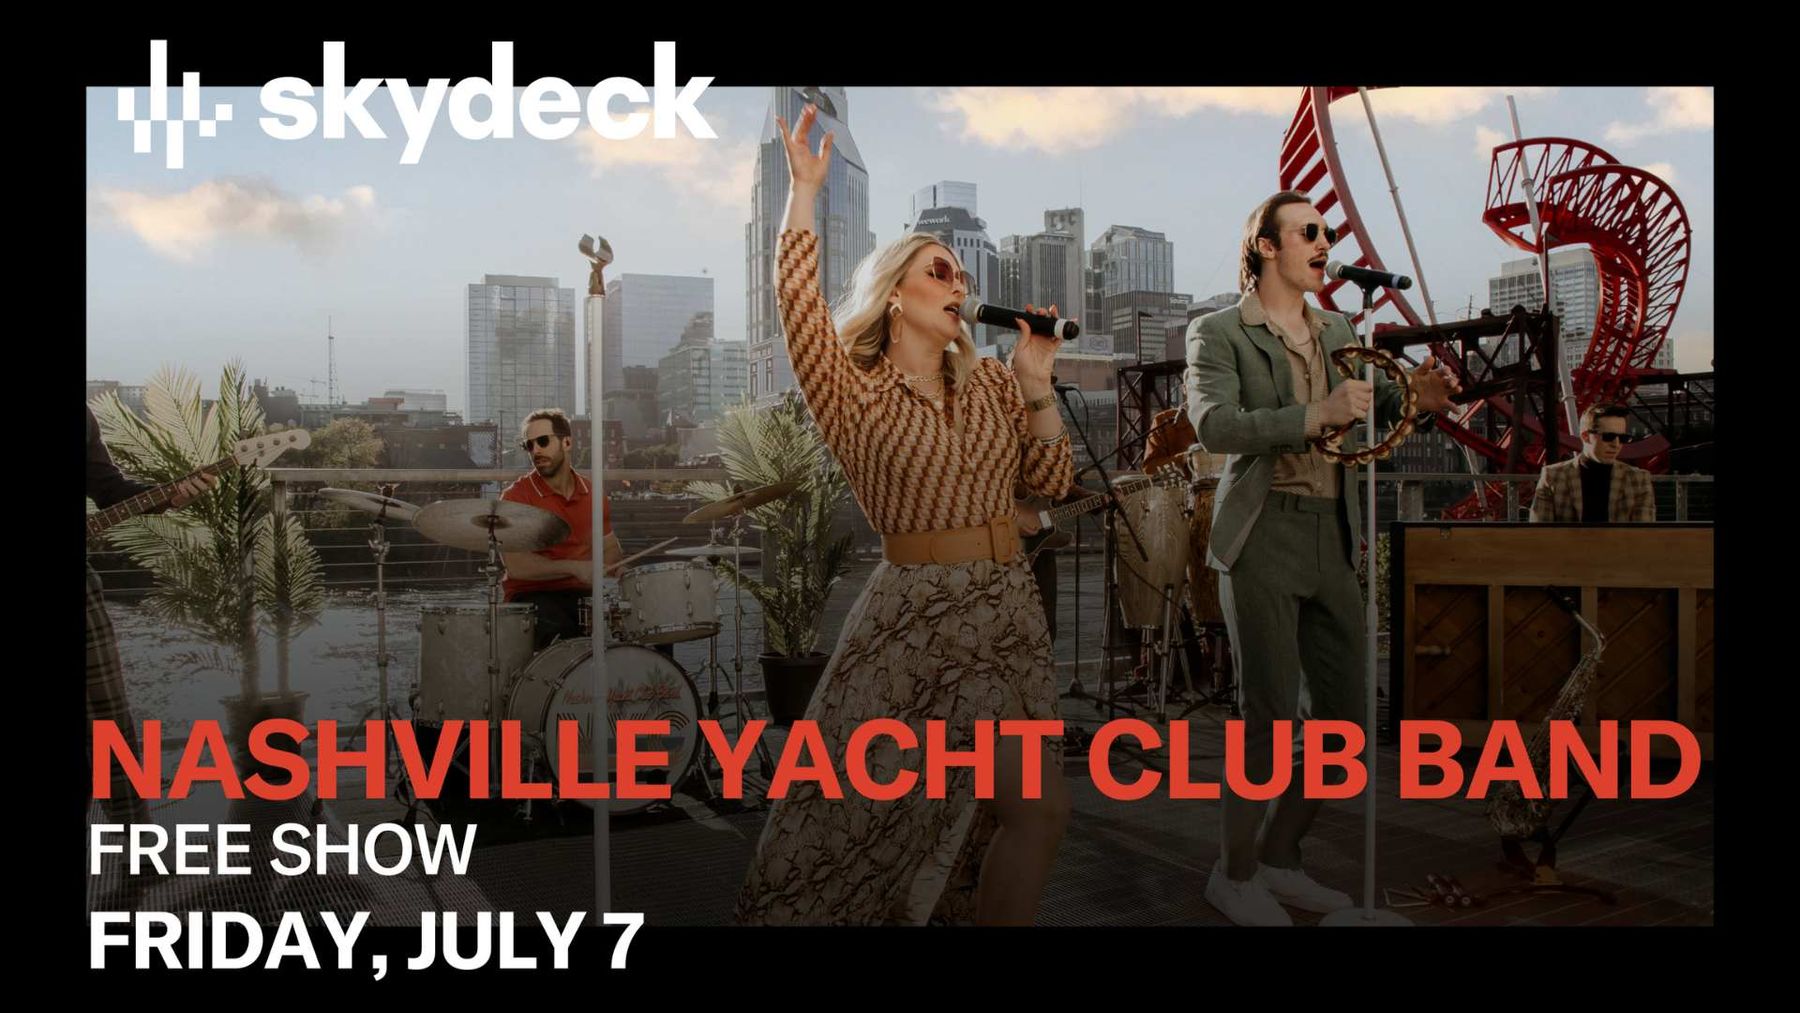 yacht club band schedule